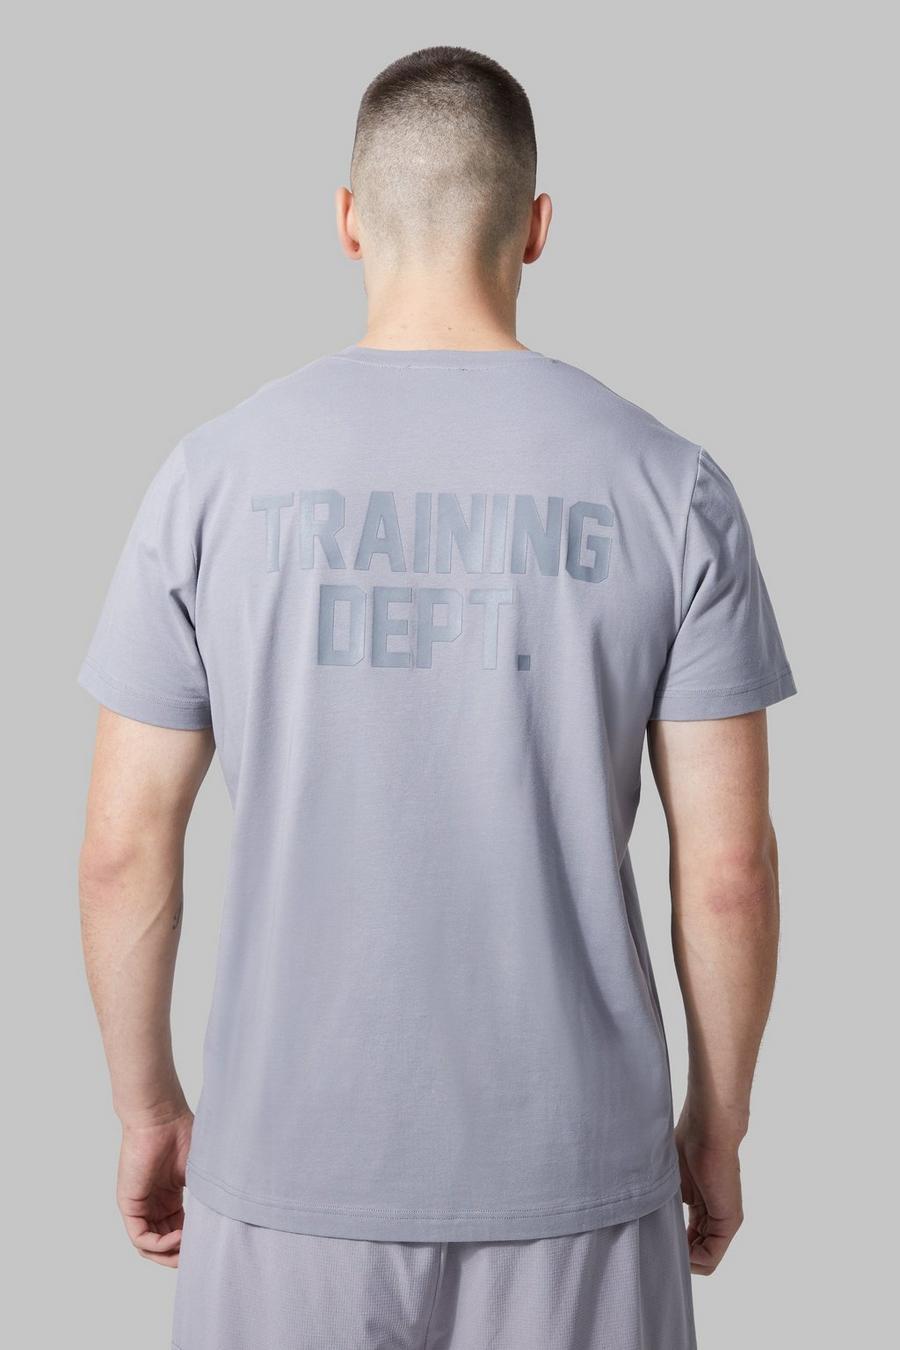 Light grey Tall Active Training Dept Performance Slim T-shirt image number 1